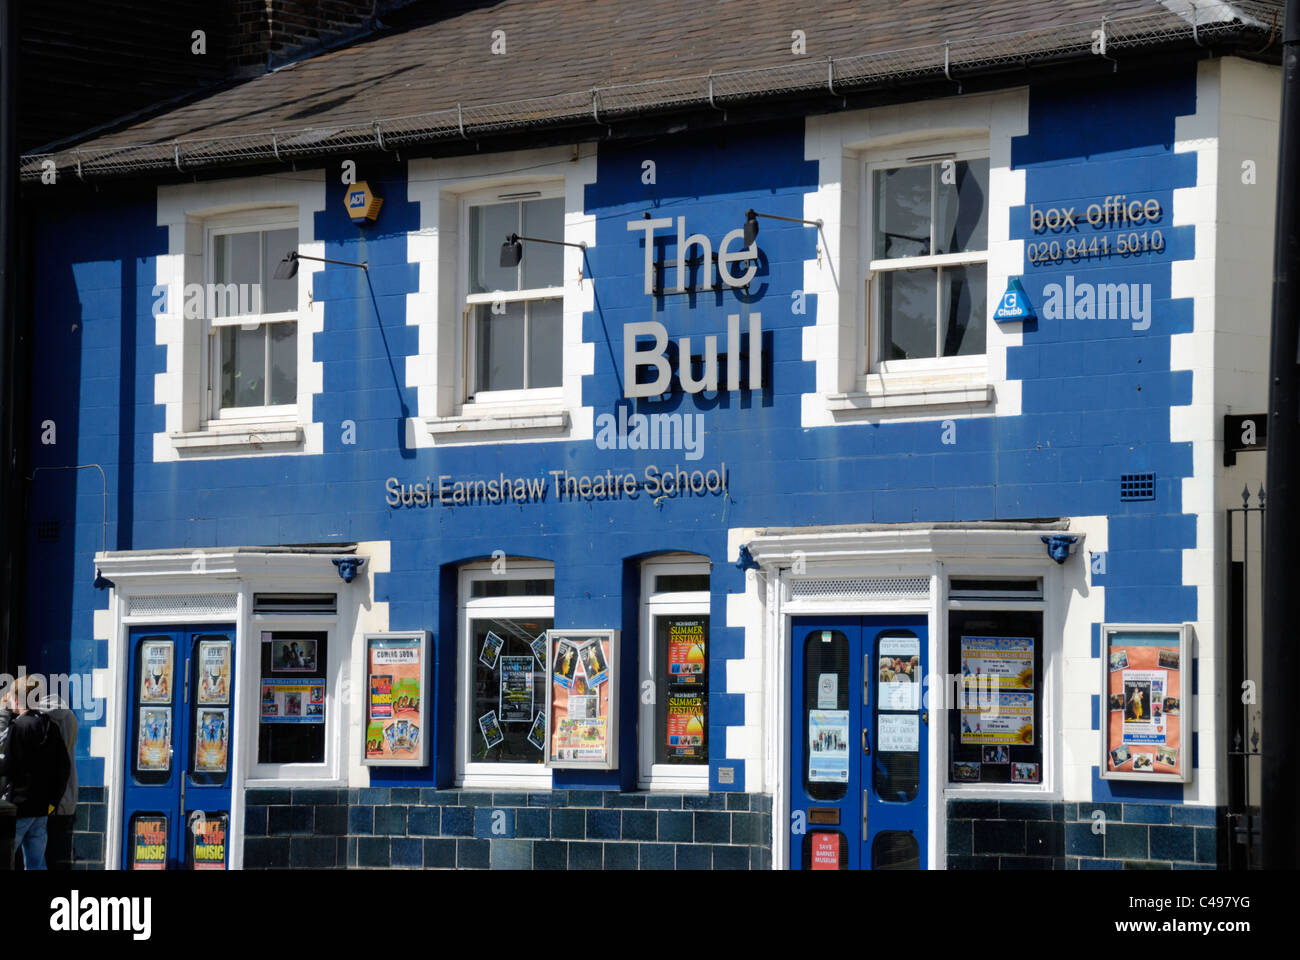 The Bull Theatre in High Barnet, London, England Stock Photo